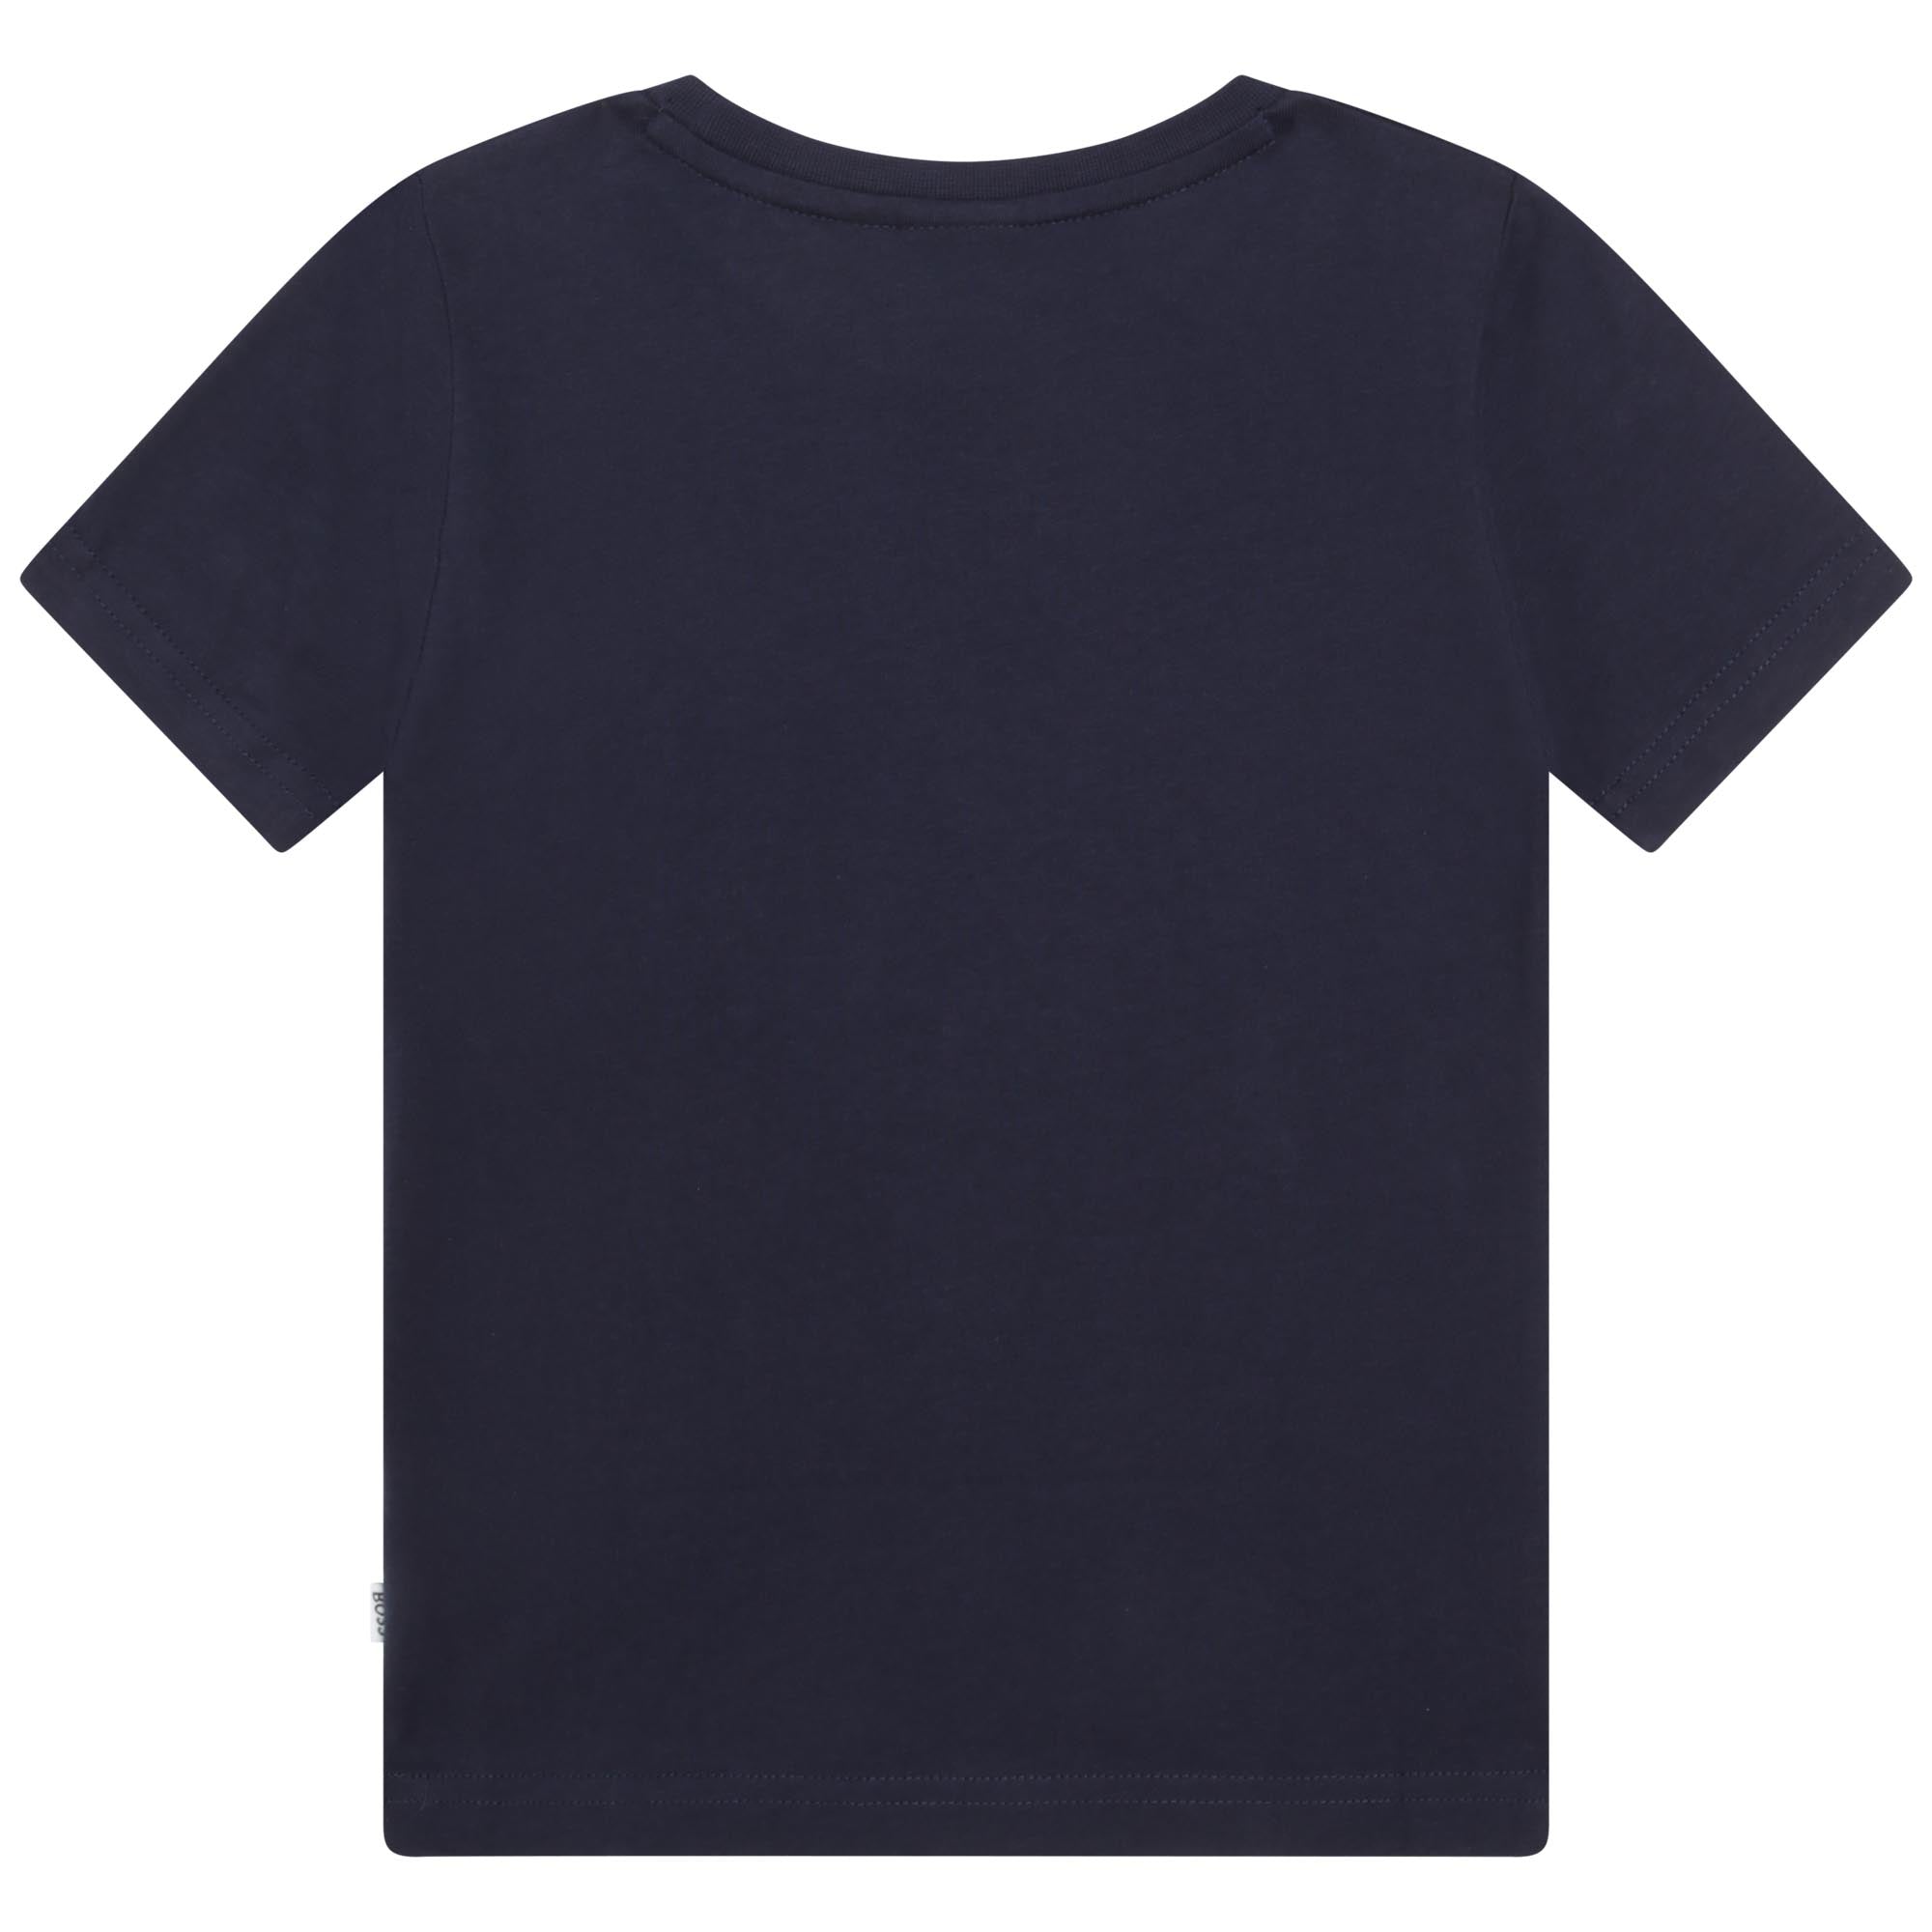 Hugo Boss Kids Logo T Shirt Navy 16Y